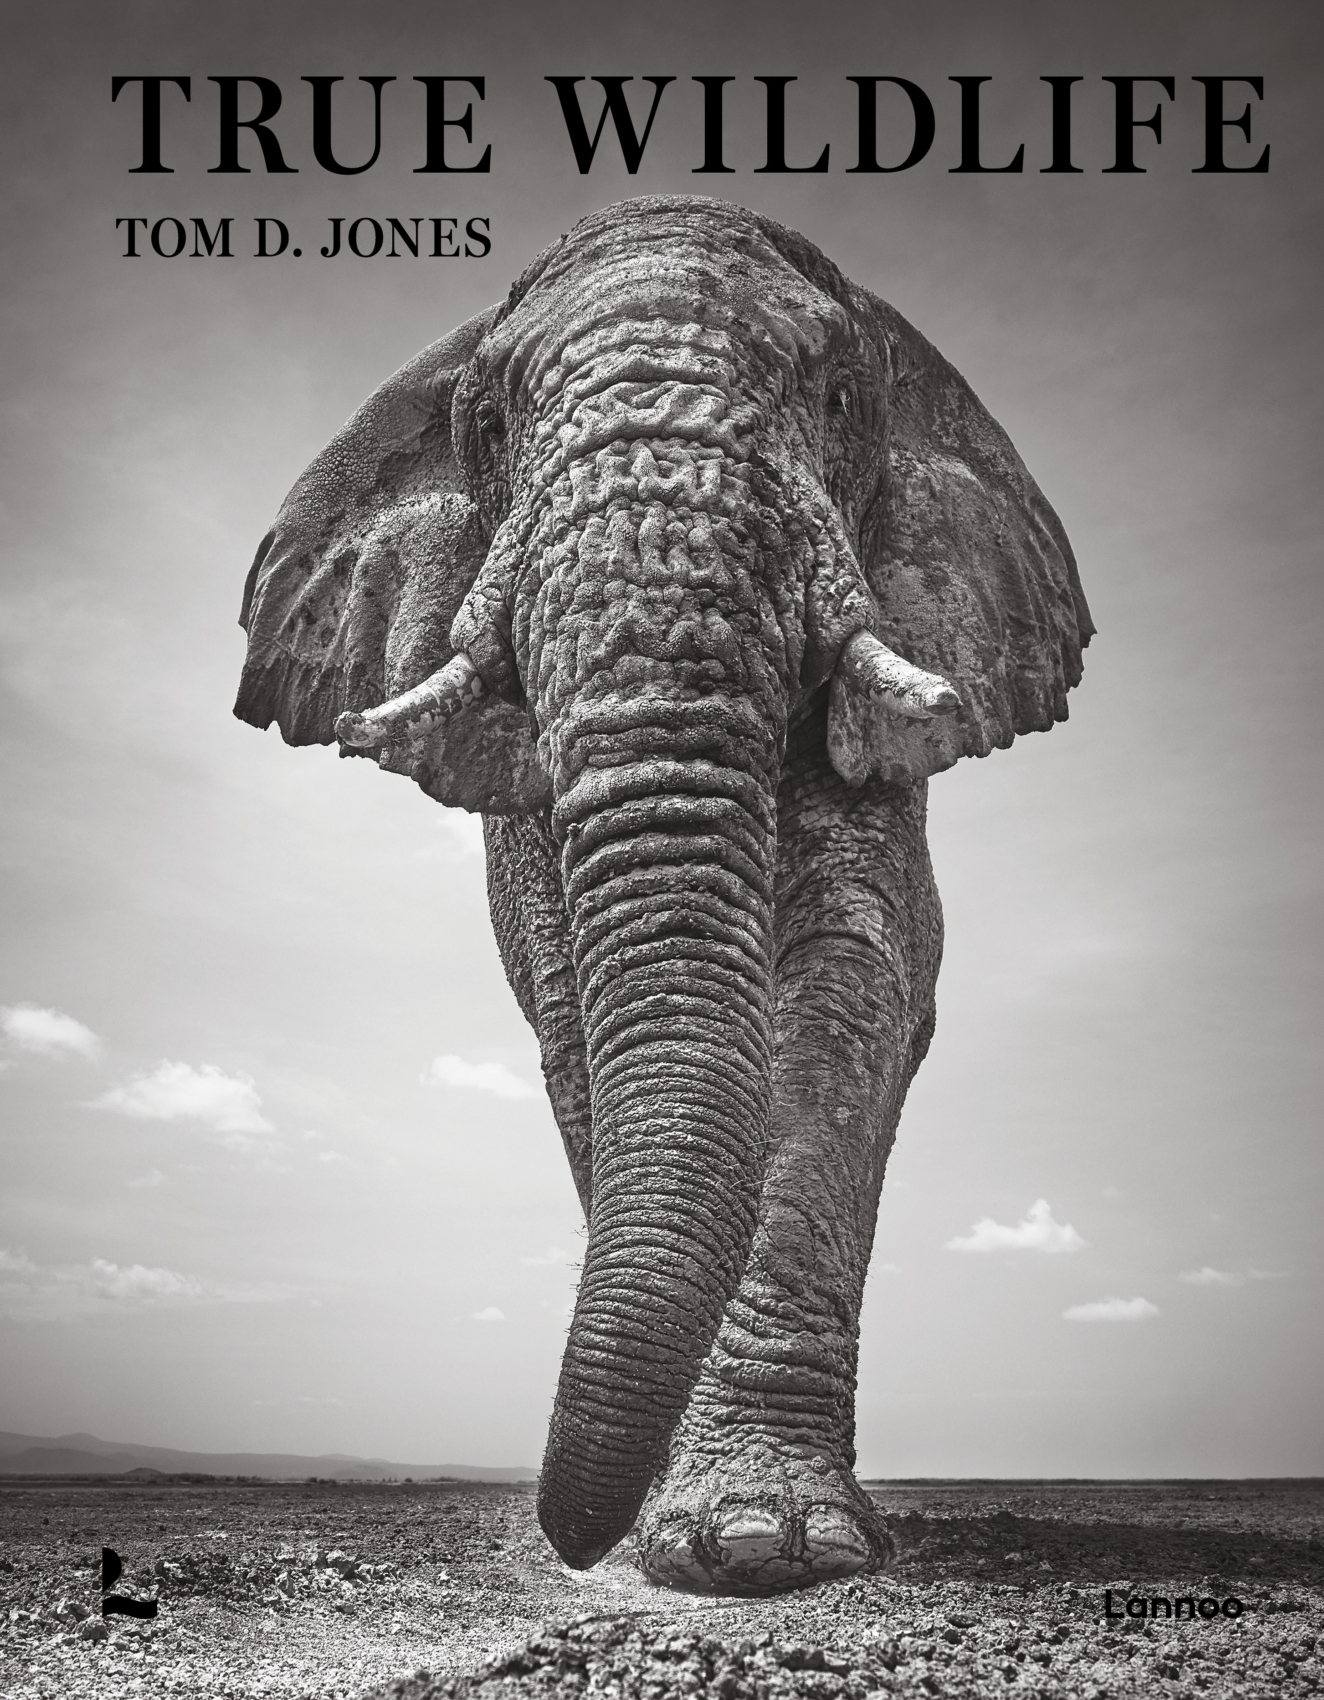 True Wildlife by Tom D. Jones